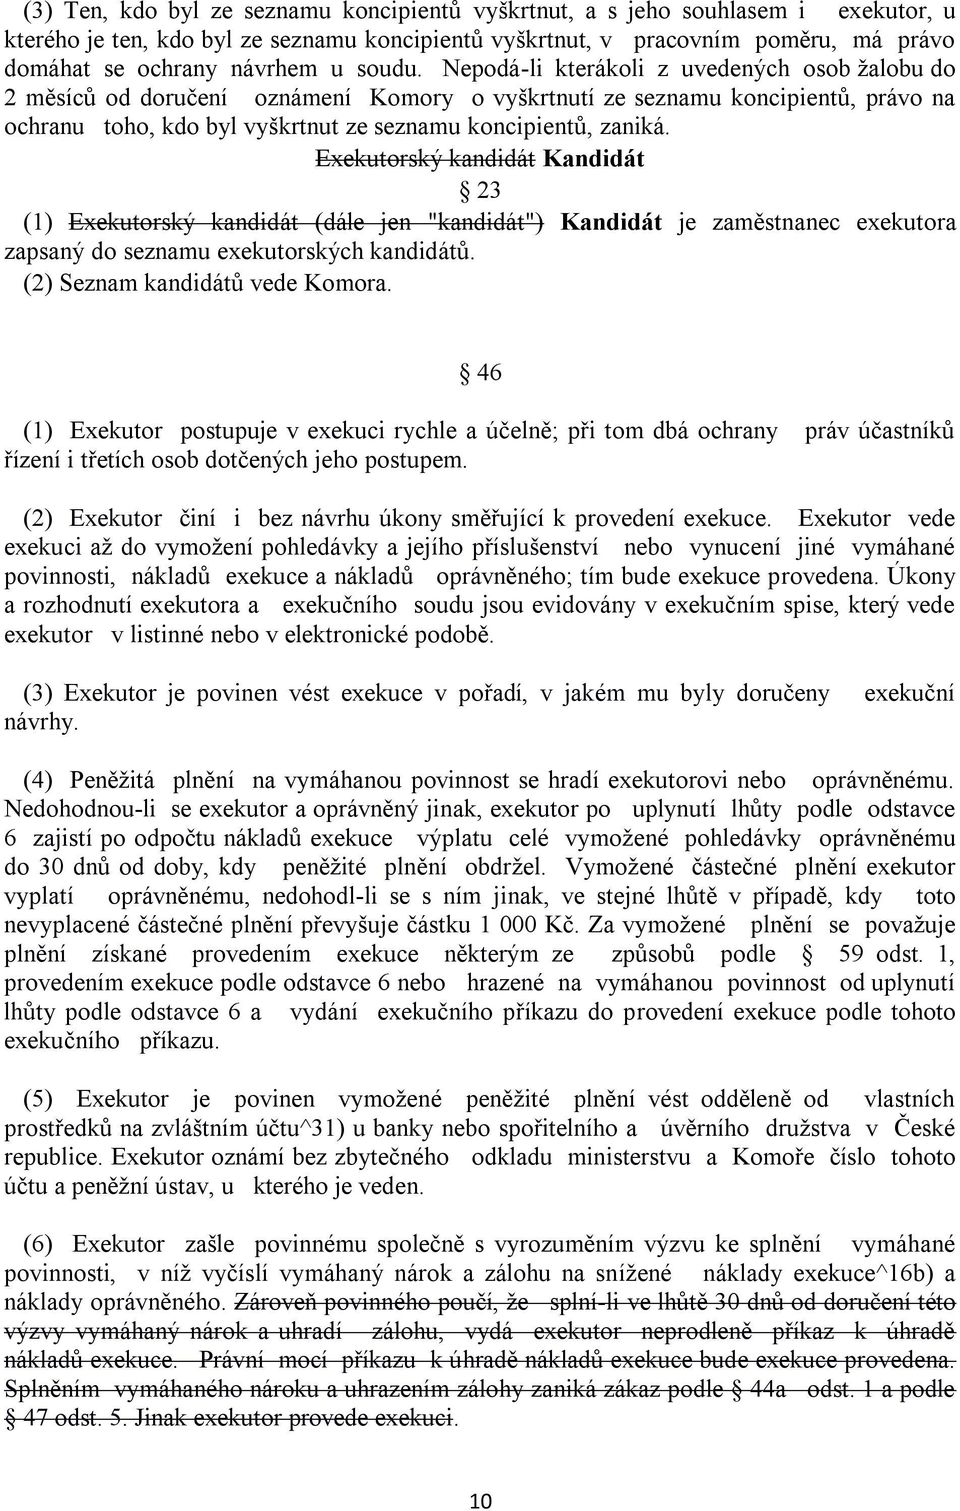 Exekutorský kandidát Kandidát 23 (1) Exekutorský kandidát (dále jen "kandidát") Kandidát je zaměstnanec exekutora zapsaný do seznamu exekutorských kandidátů. (2) Seznam kandidátů vede Komora.